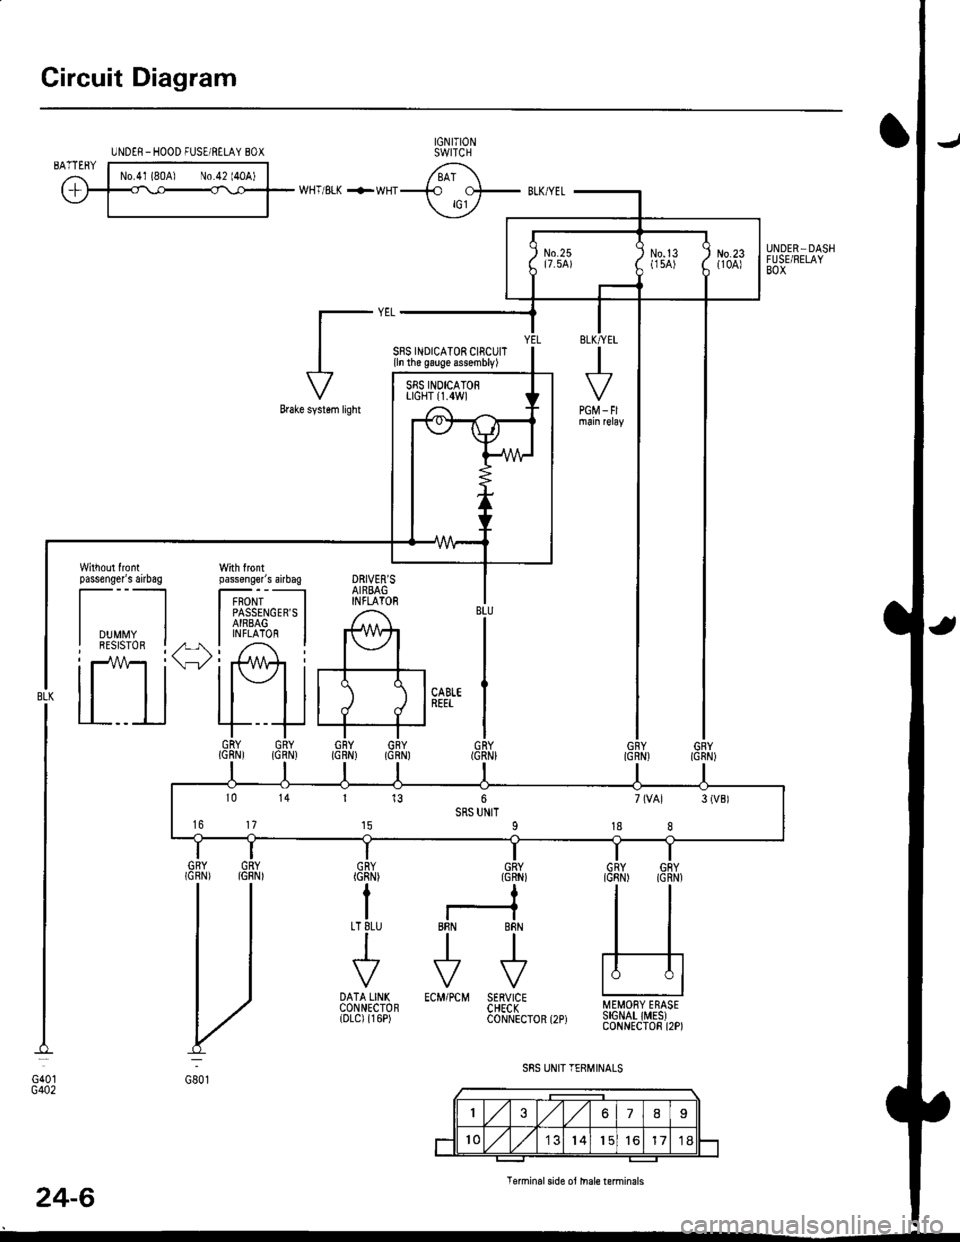 HONDA CIVIC 1996 6.G Owners Manual Circuit Diagram
UNDER-HOOD FUSE/RELAY 8OXIGNITIONSWITCH
WHT/8LI( +WHT
Brake systsm light
passengers airbag
l----ltlI DUMMY II BESISTOR I
tll
tl
la rl
MEMORY ERASESIGNAT IMES)CONNECTOR I2P)
GRY{GRN)
I